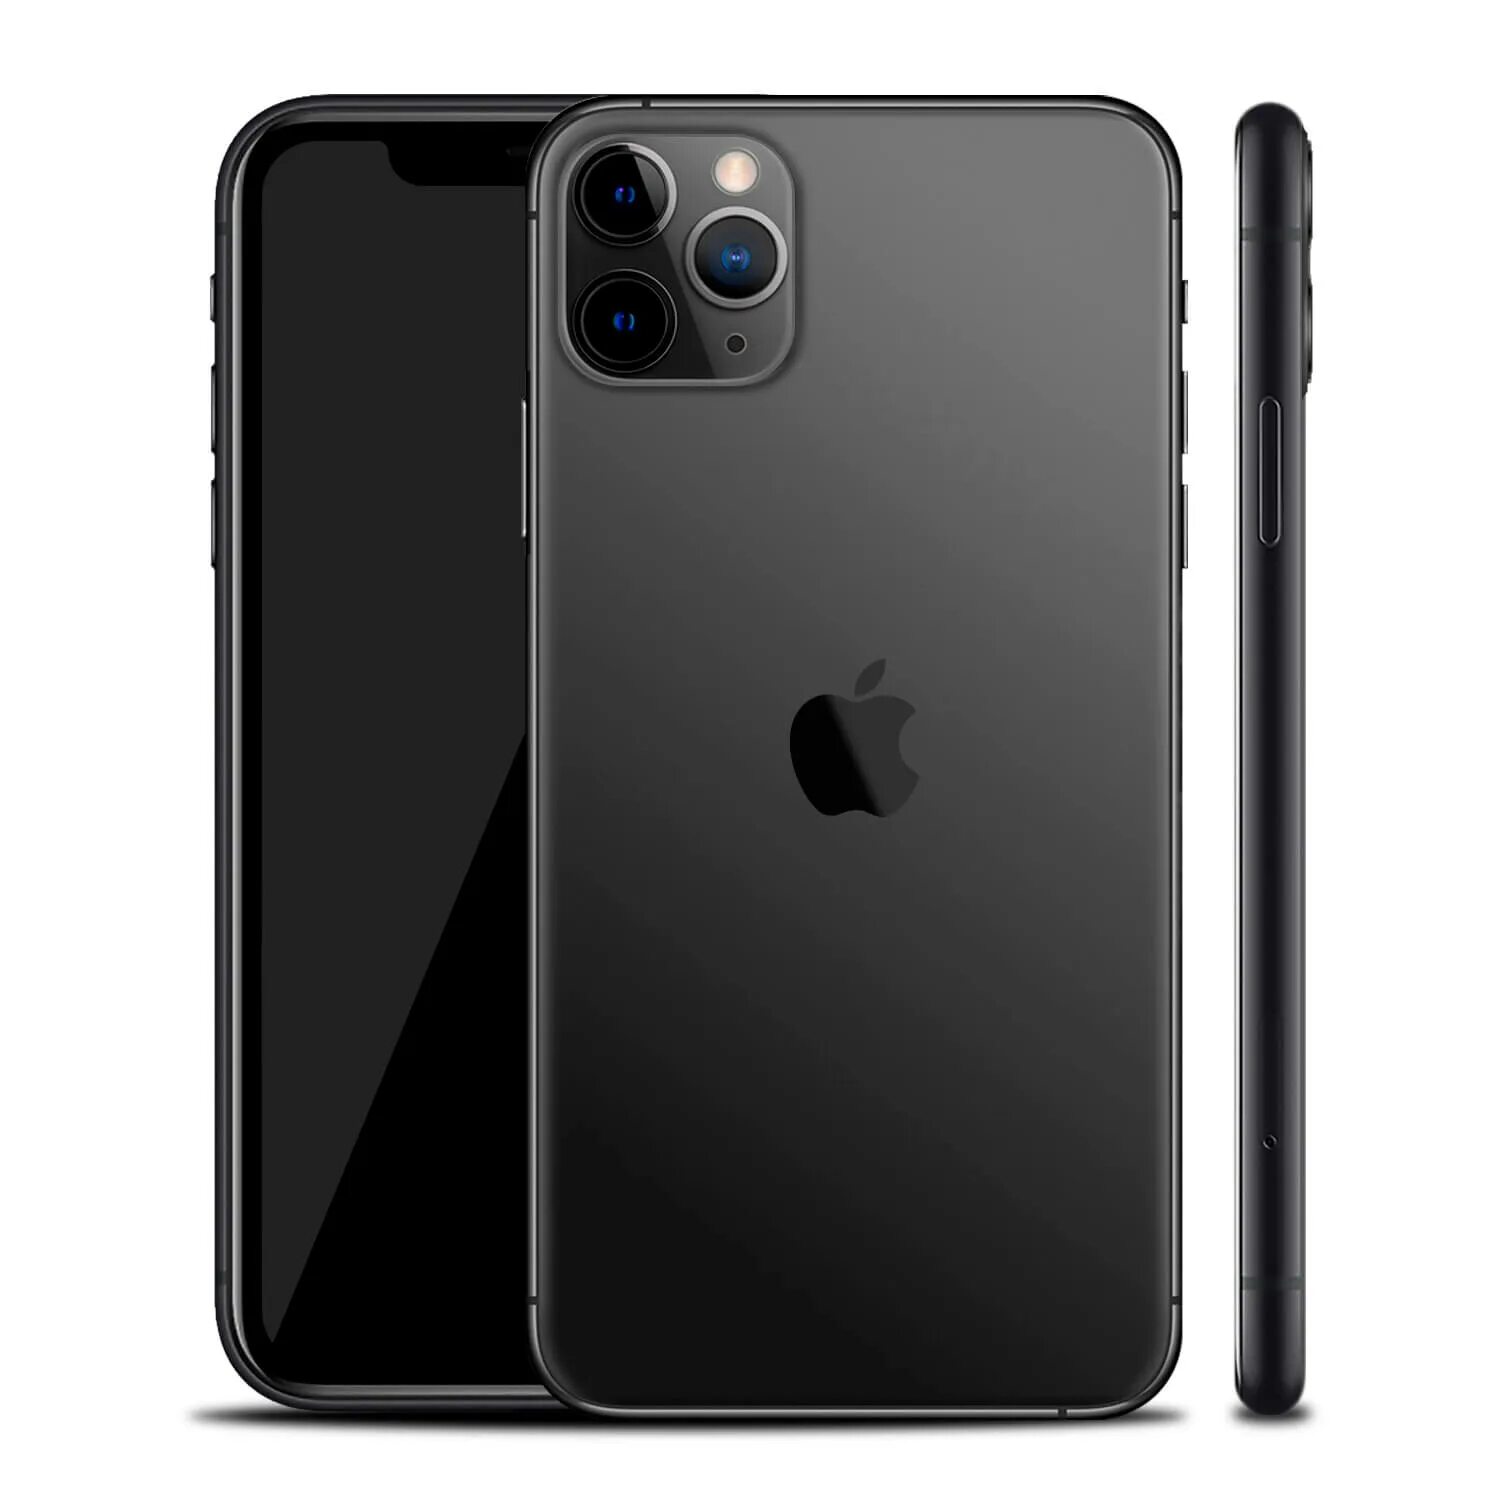 Iphone 11 Pro Max Black. Iphone 11 64gb Black. Iphone 11 Pro Max 256gb черный. Iphone 11 Pro 64gb. Айфон 11 256 гб оригинал